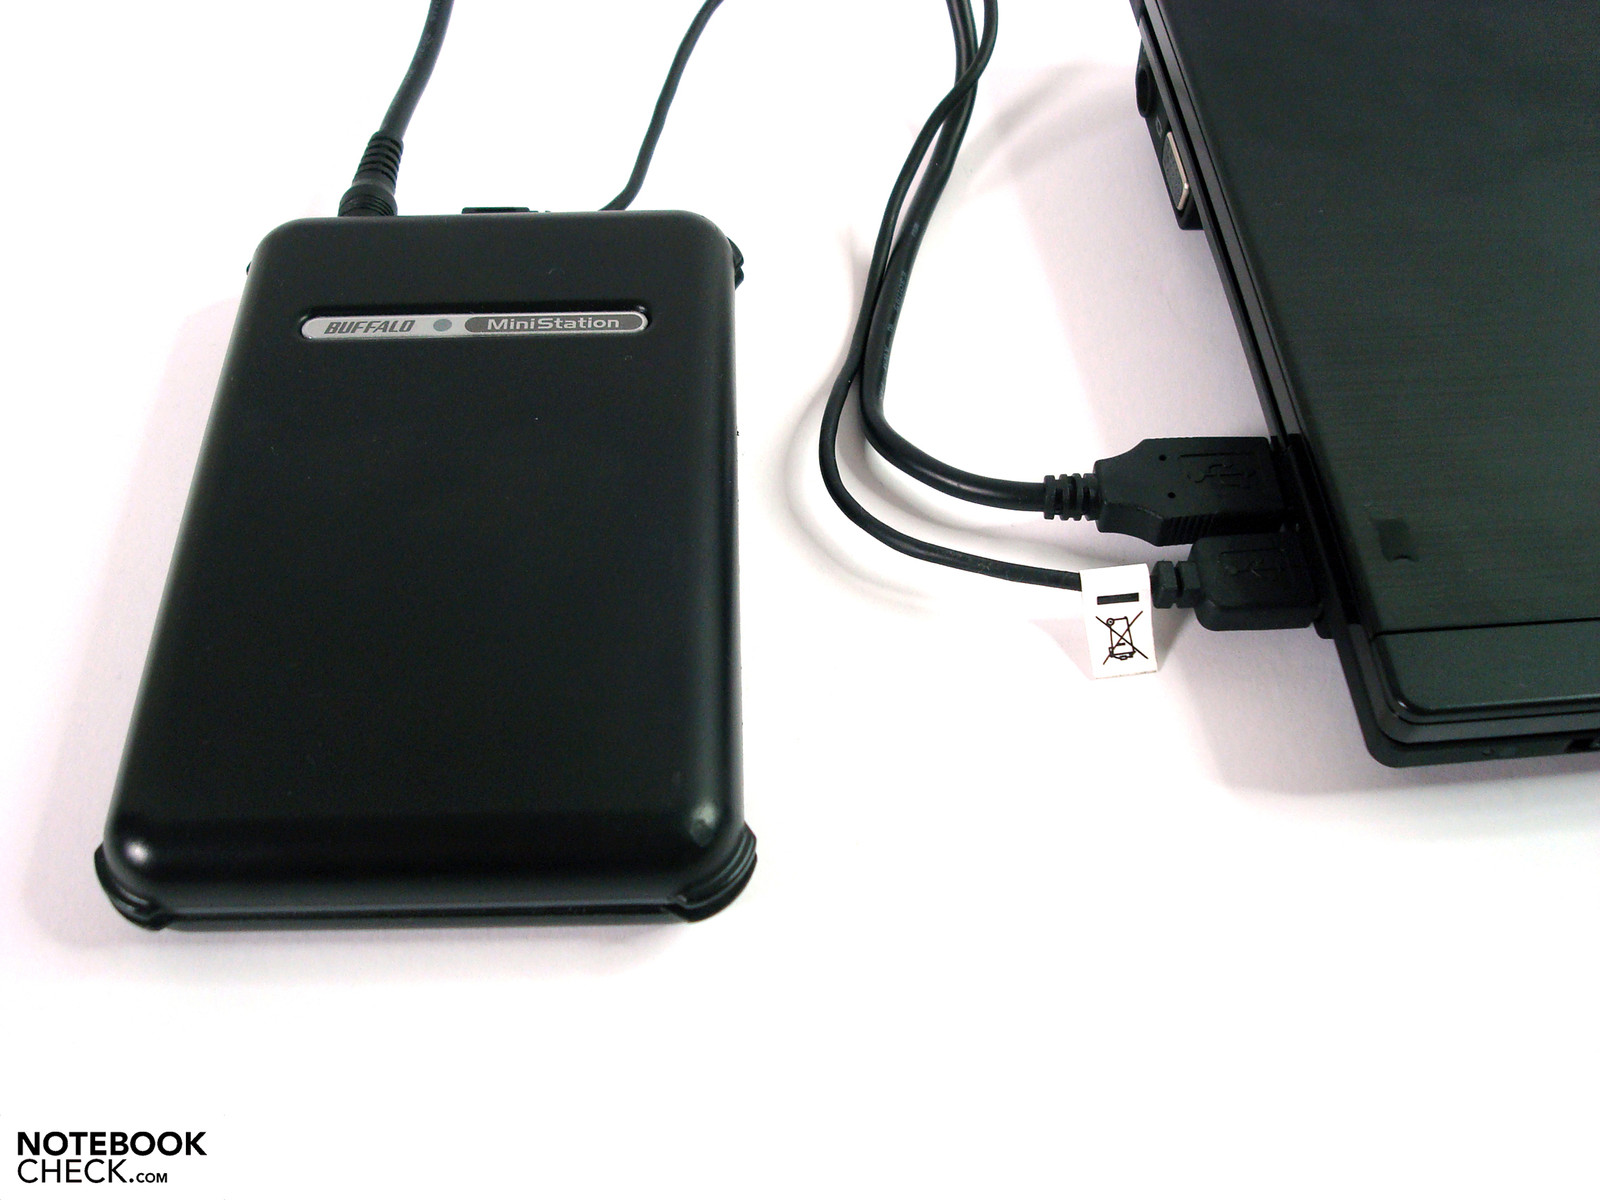 Review Buffalo Ministation TurboUSB portable hard drive 320 GB - Reviews